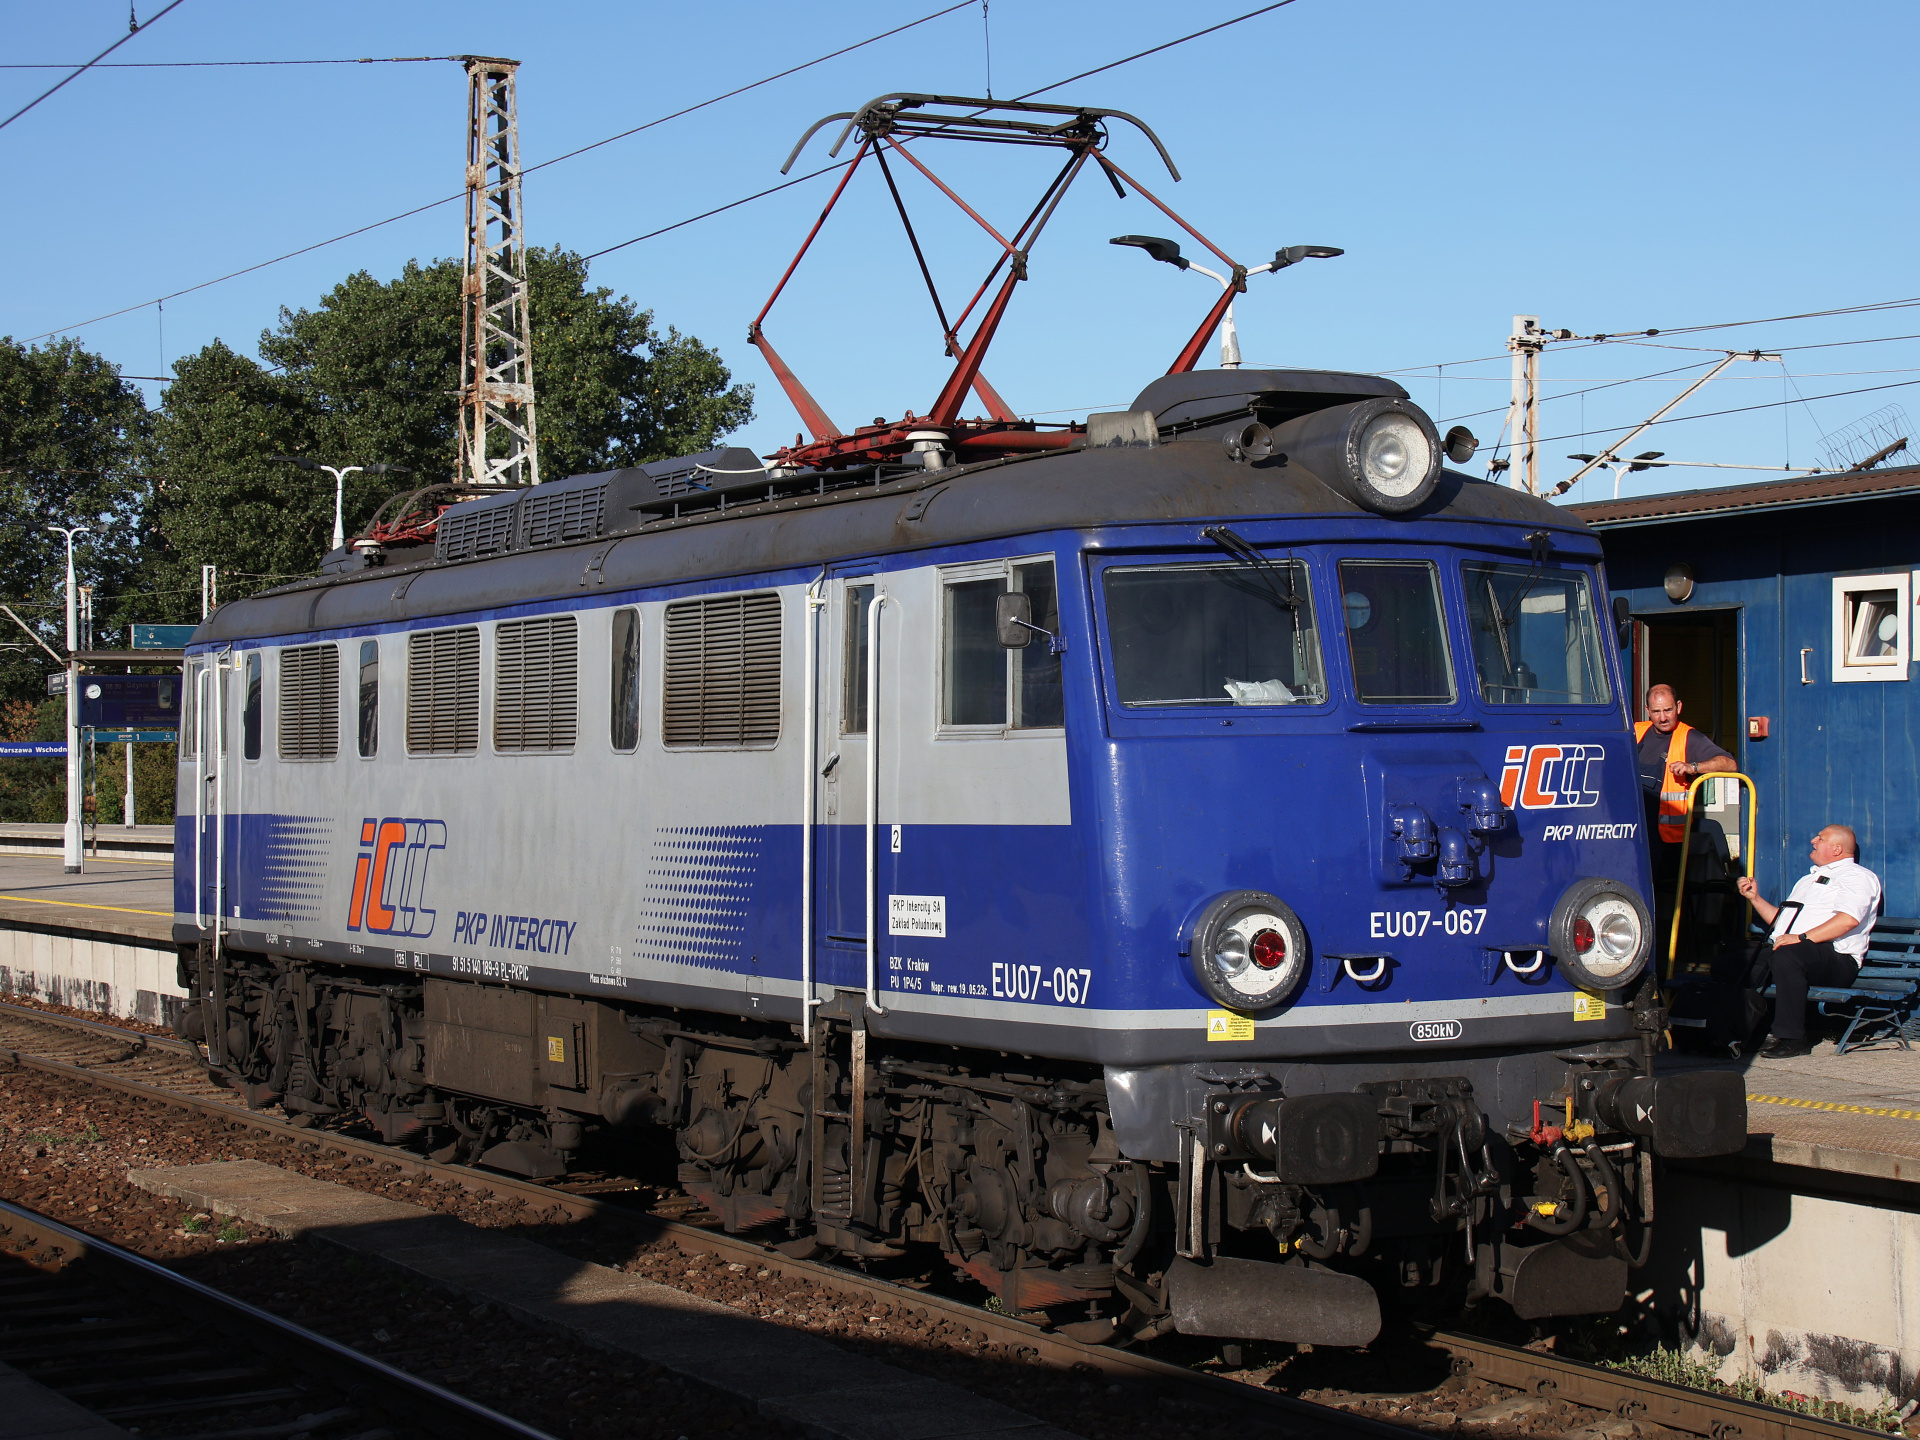 EU07-067 (Vehicles » Trains and Locomotives » Pafawag 4E)